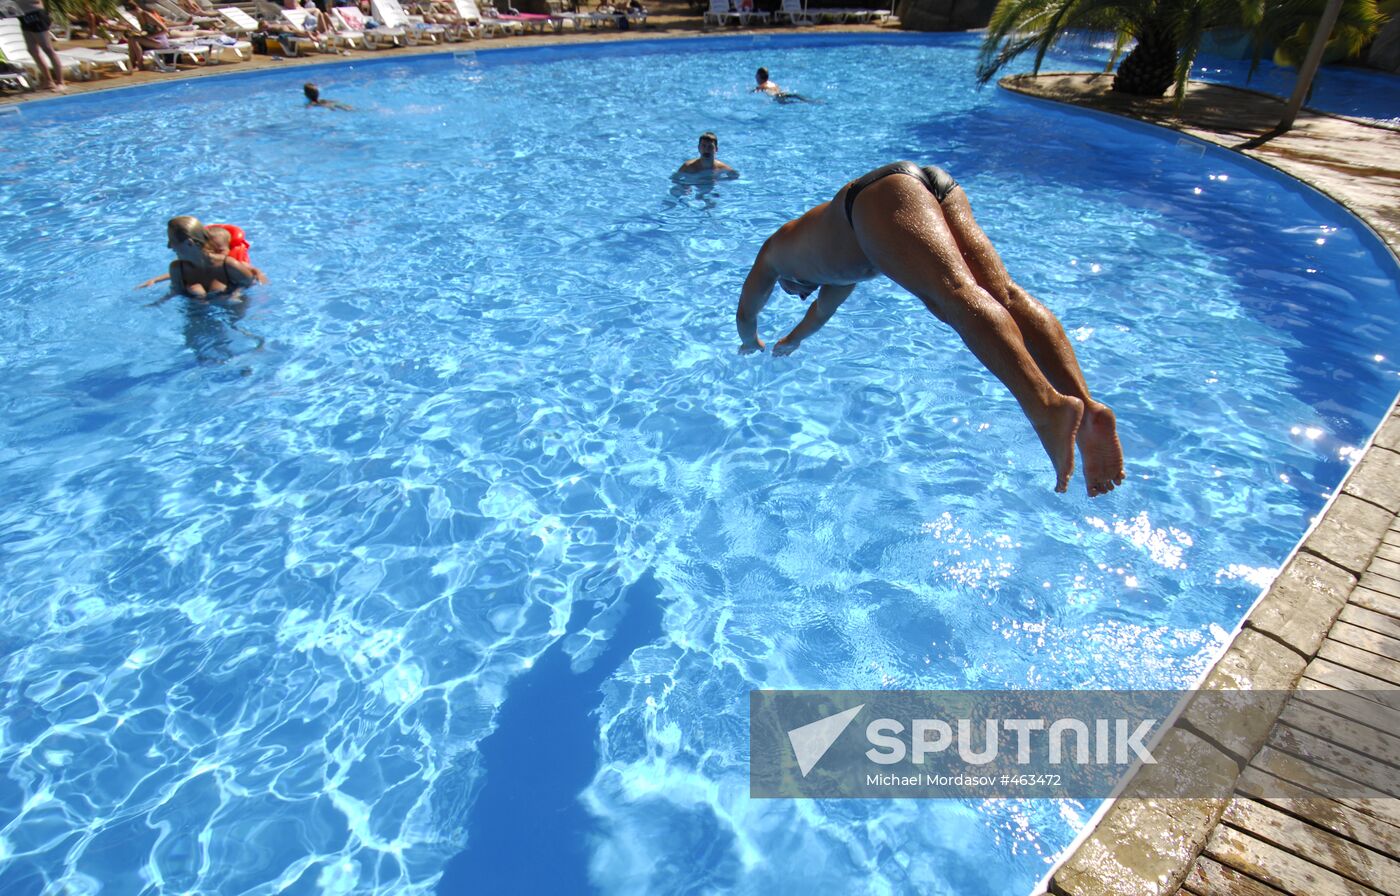 Black Sea holiday. Off-peak season in Sochi